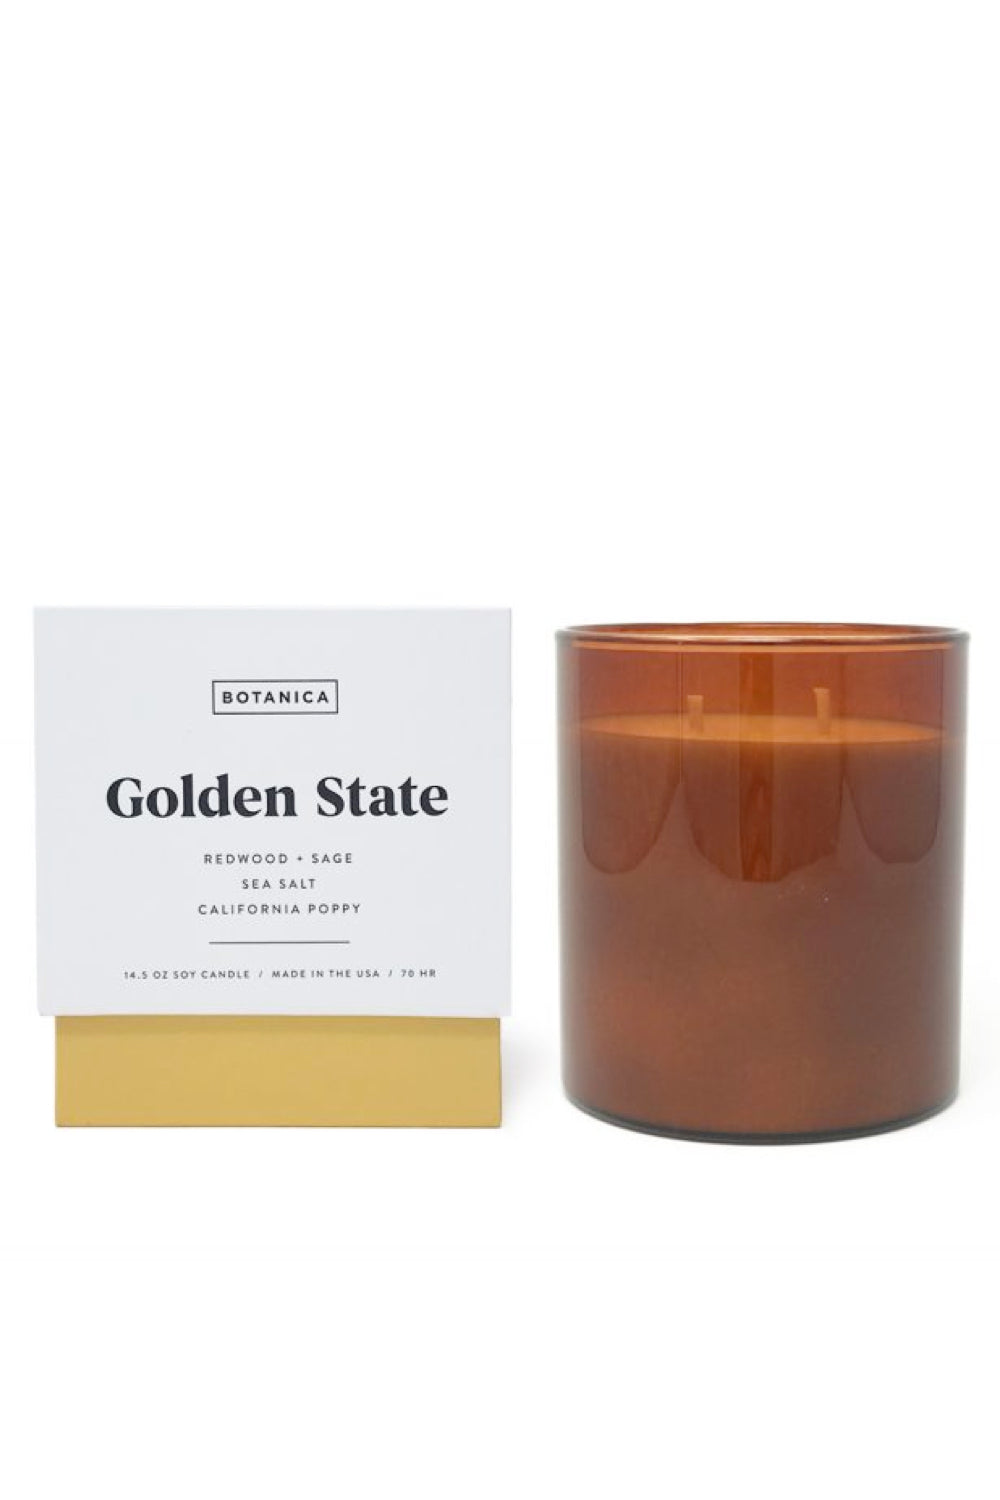 Botanica Large Candle Golden State